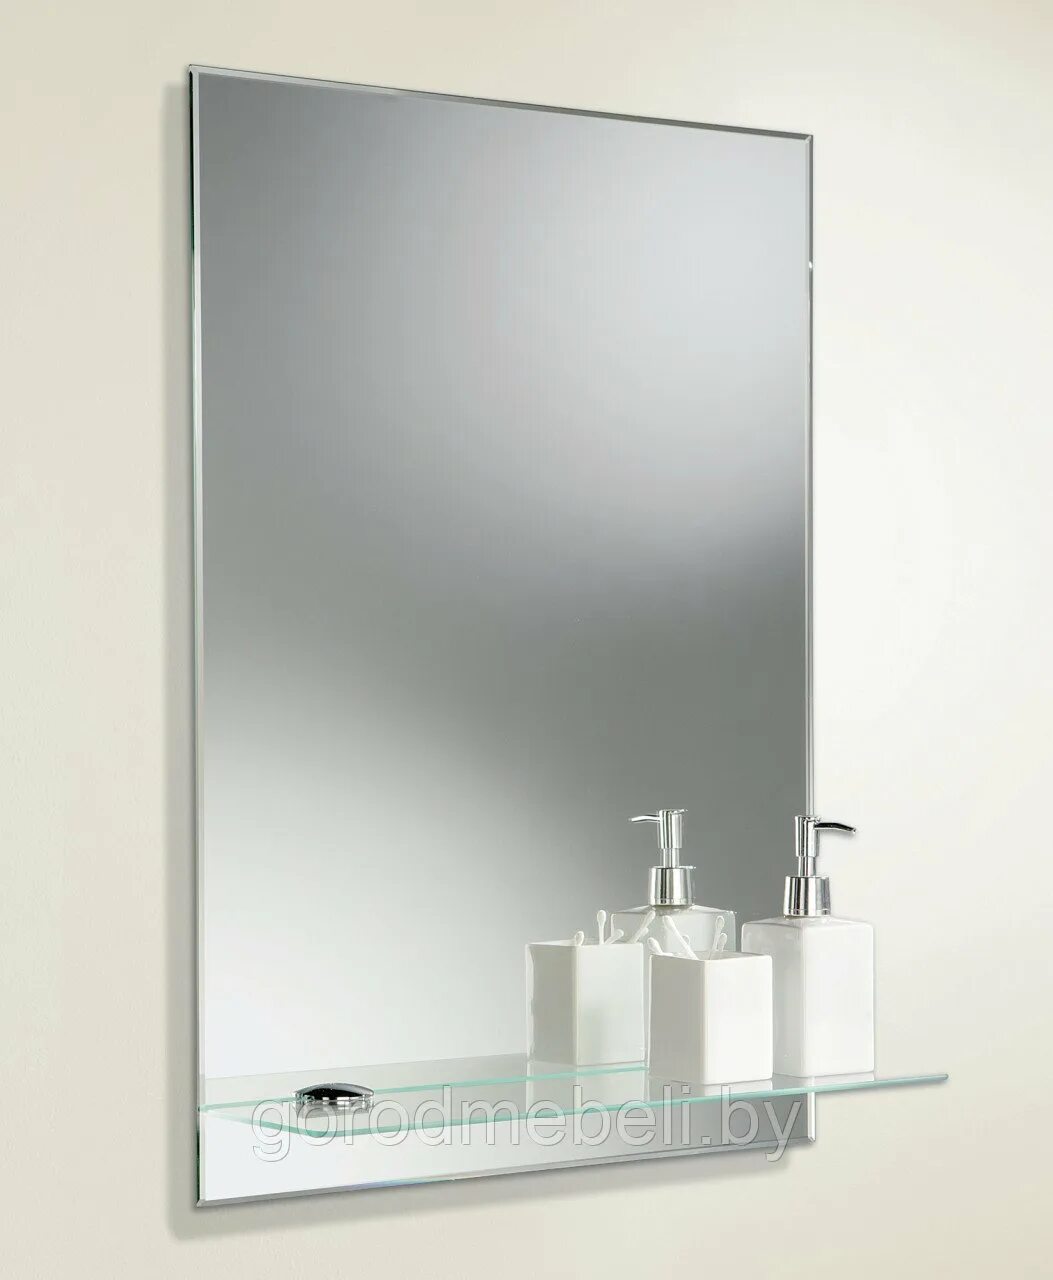 Полка с зеркалом купить ванну. Зеркало Silver Mirrors 455-1400 крепеж. Зеркало "каприз-Люкс" (490*680). Зеркало для ванной комнаты. Зеркала для ванной комнаты с полочкой.